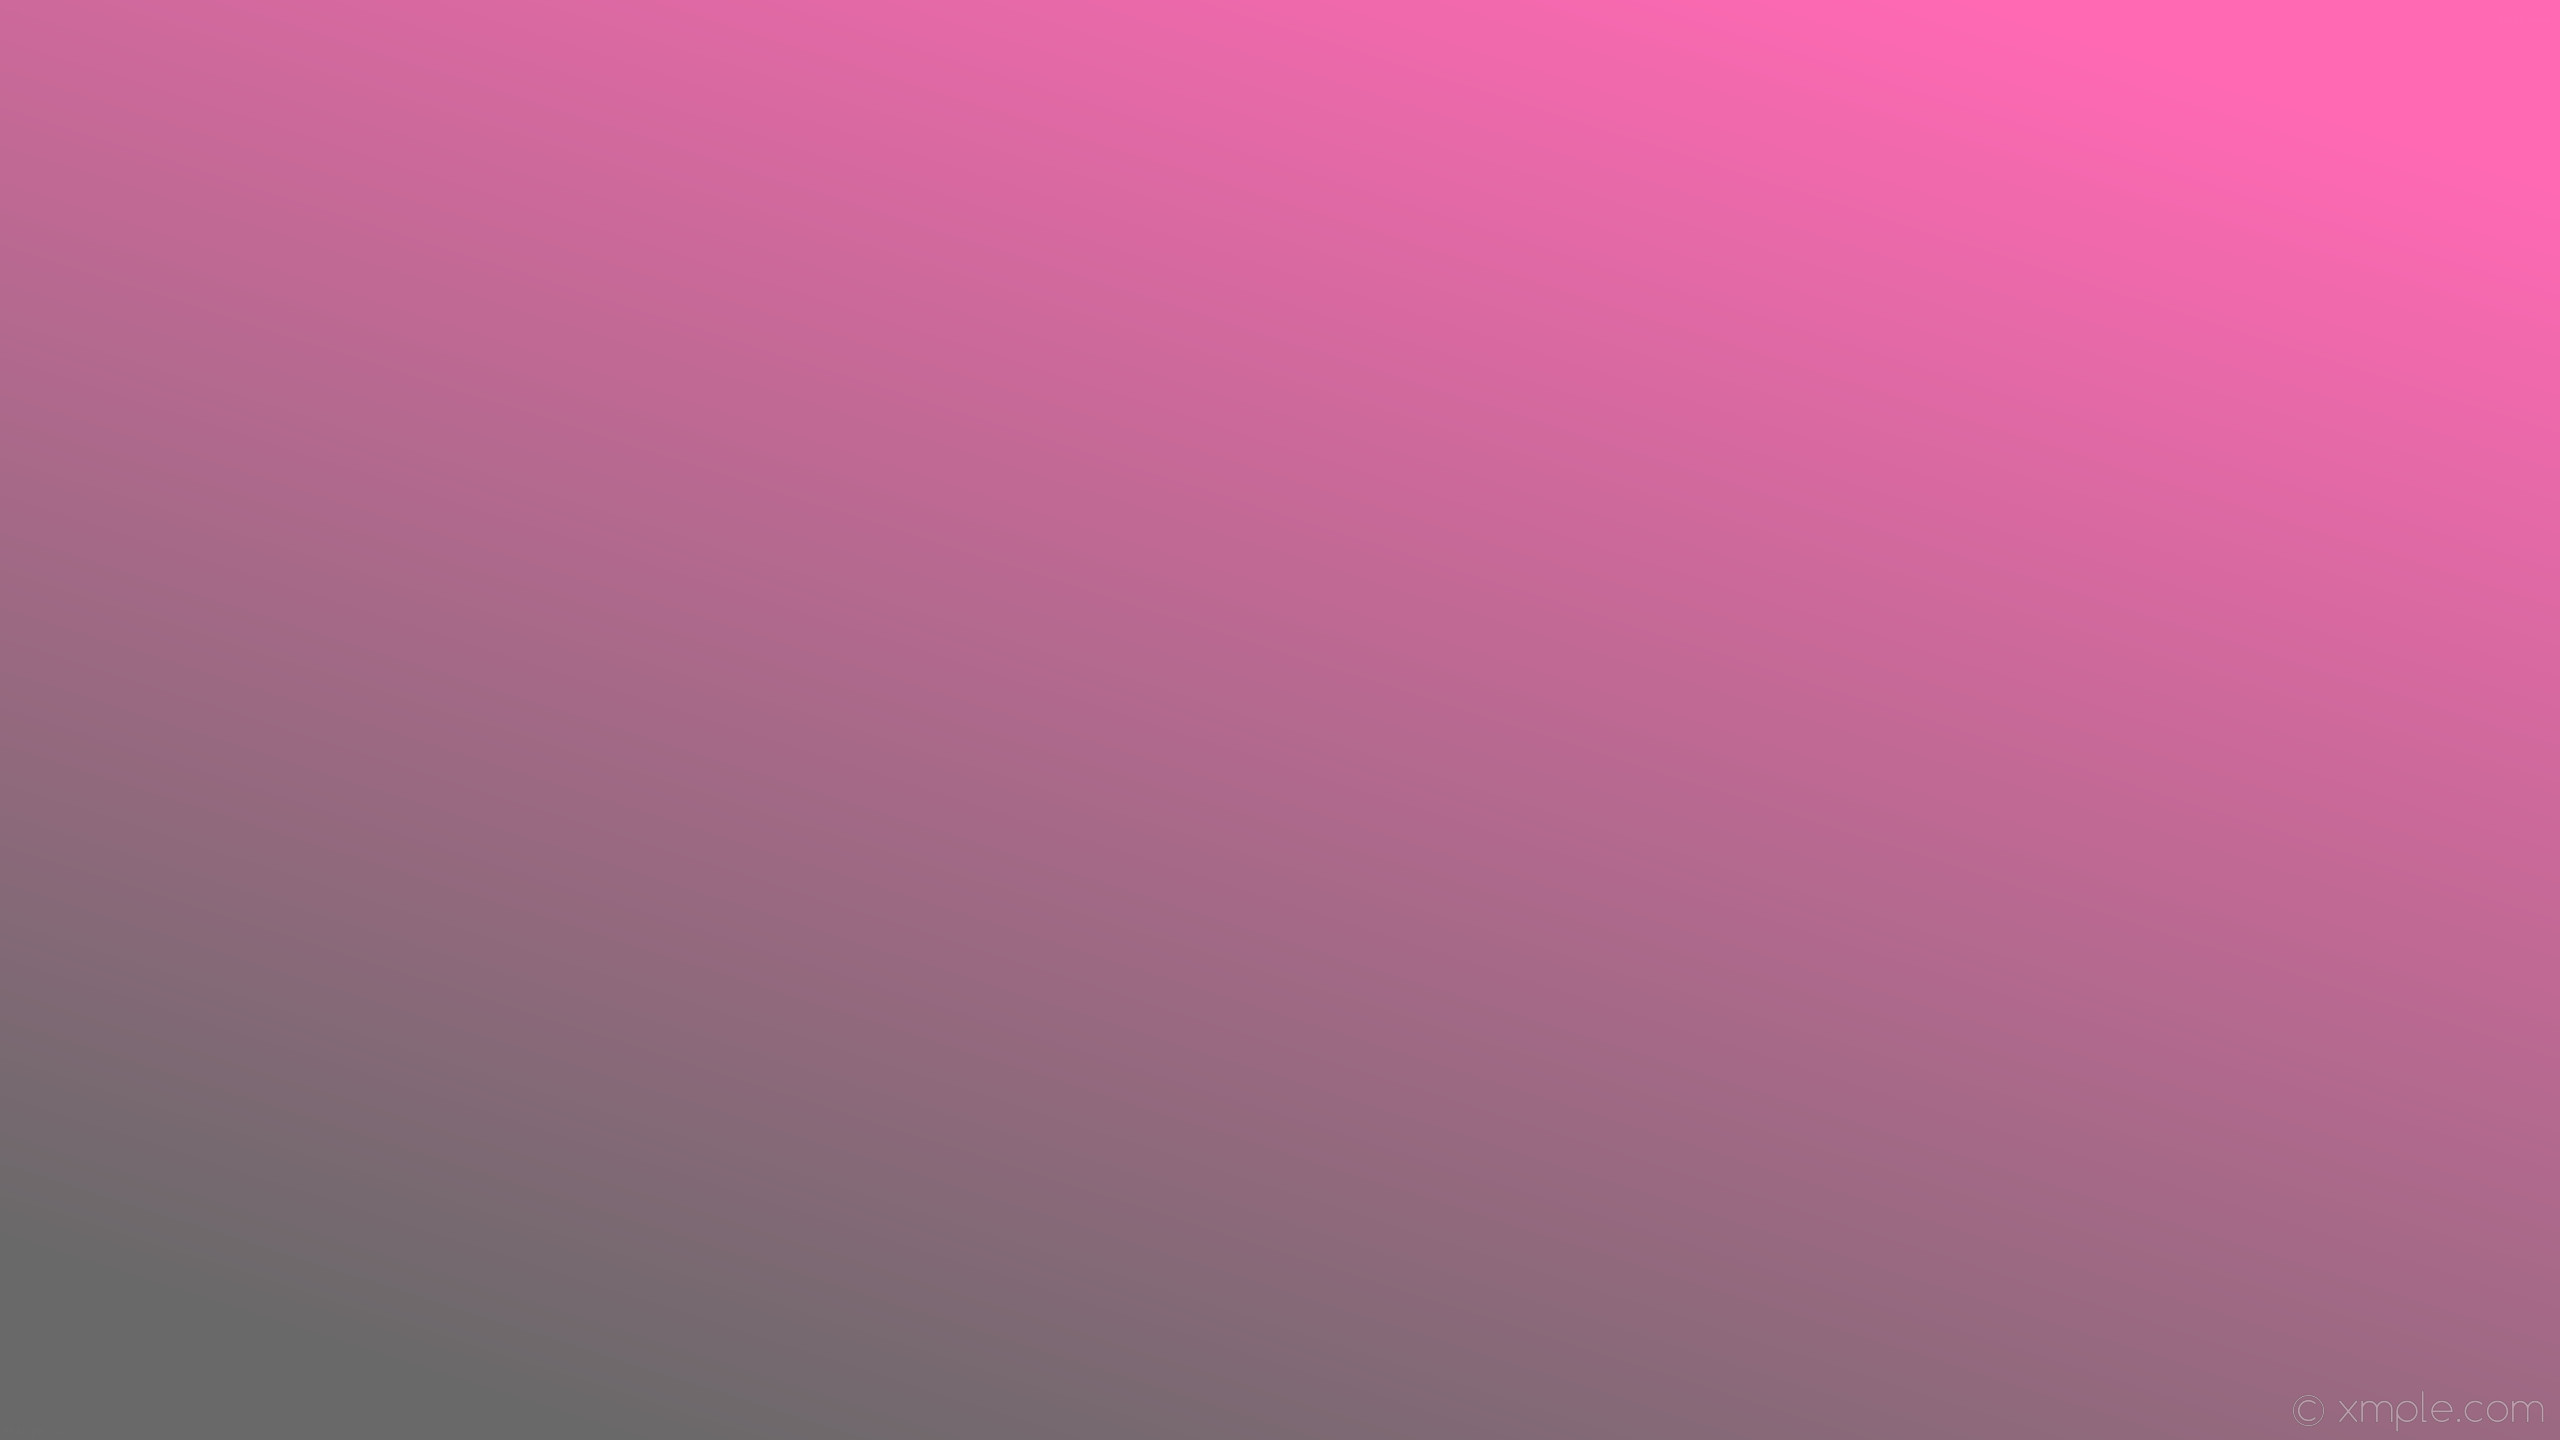 2560x1440 wallpaper pink gradient grey linear hot pink dim gray #ff69b4 #696969 45Â°